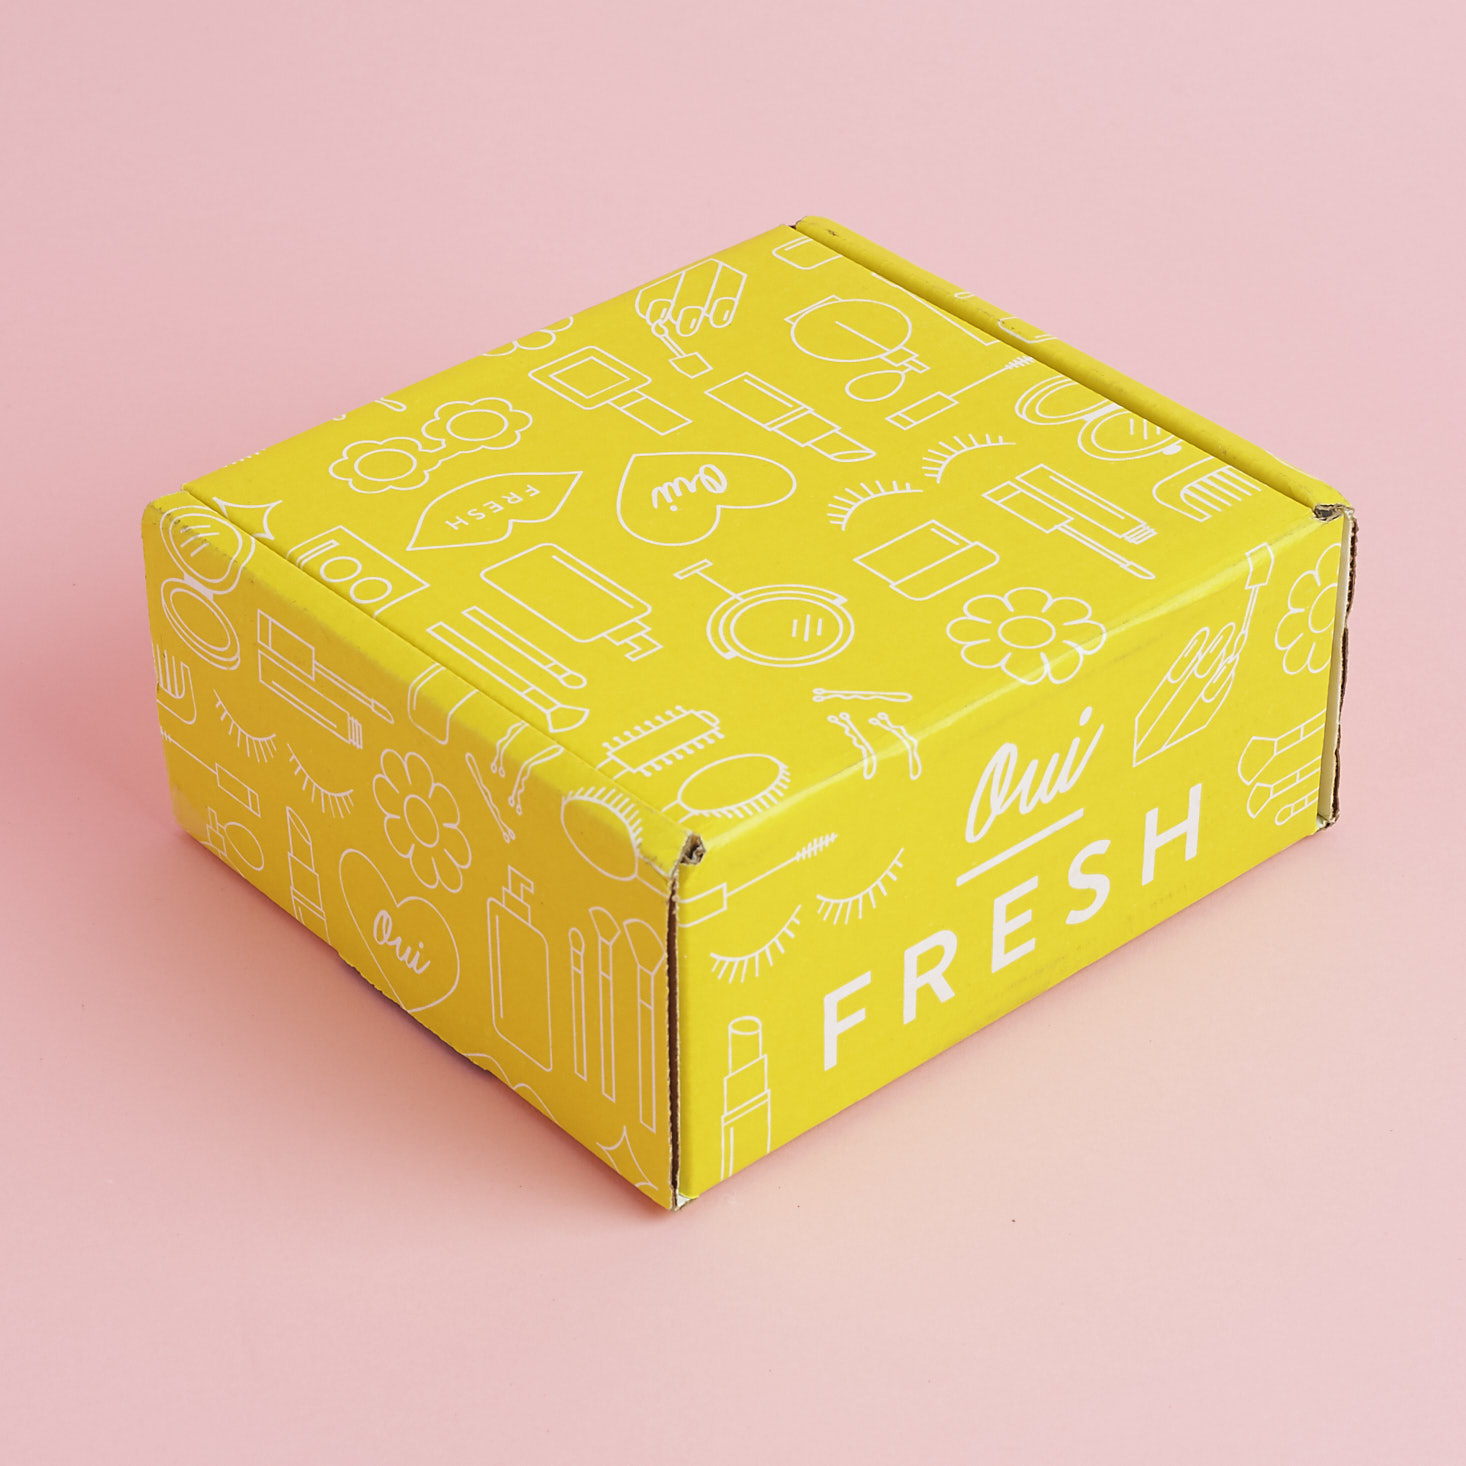 Oui Fresh Beauty Box Subscription Review – June 2018